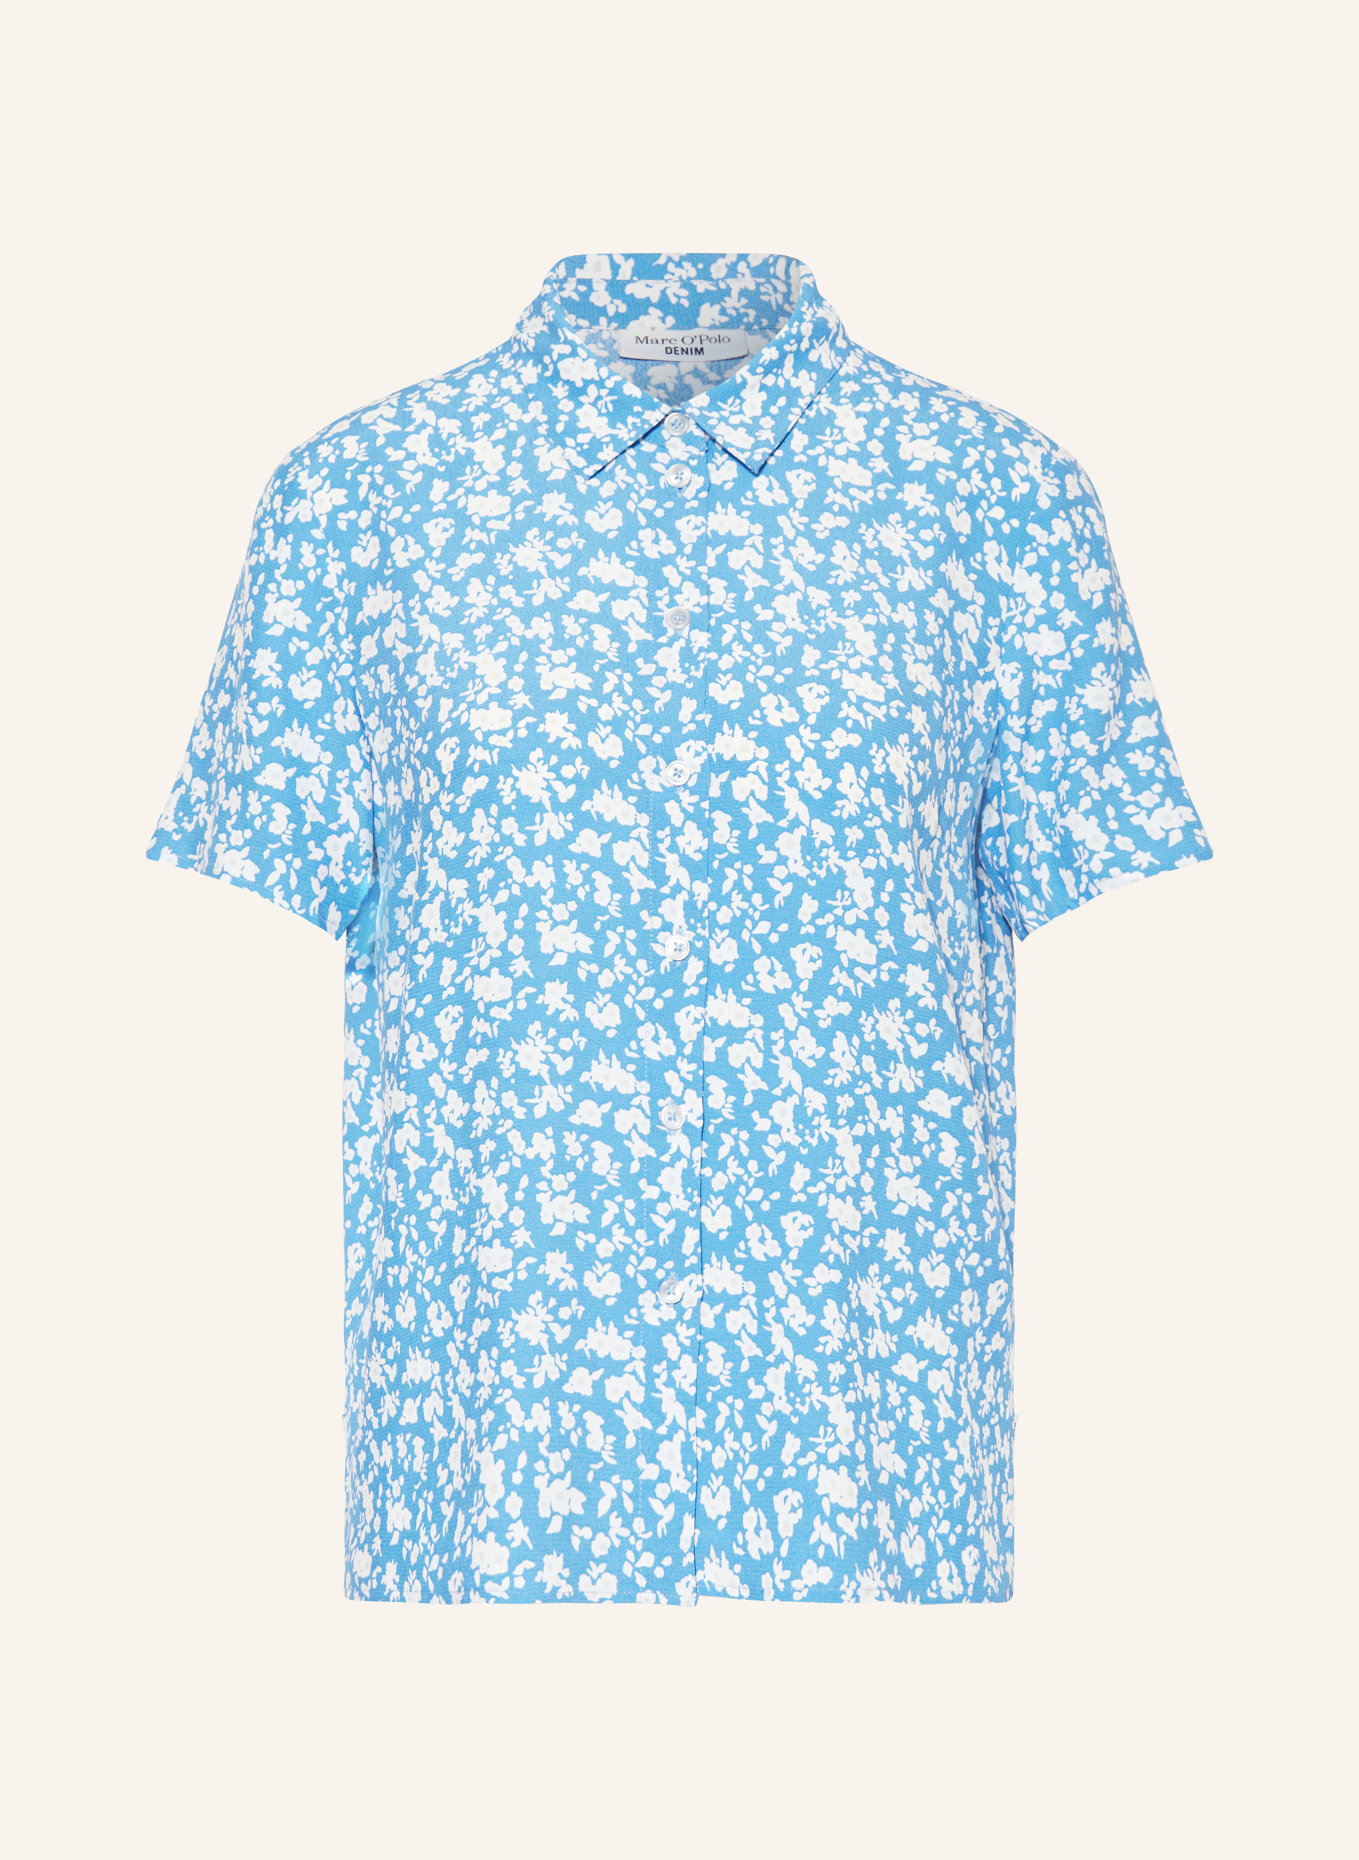 Marc O'Polo DENIM Shirt blouse, Color: BLUE/ WHITE/ LIGHT GRAY (Image 1)